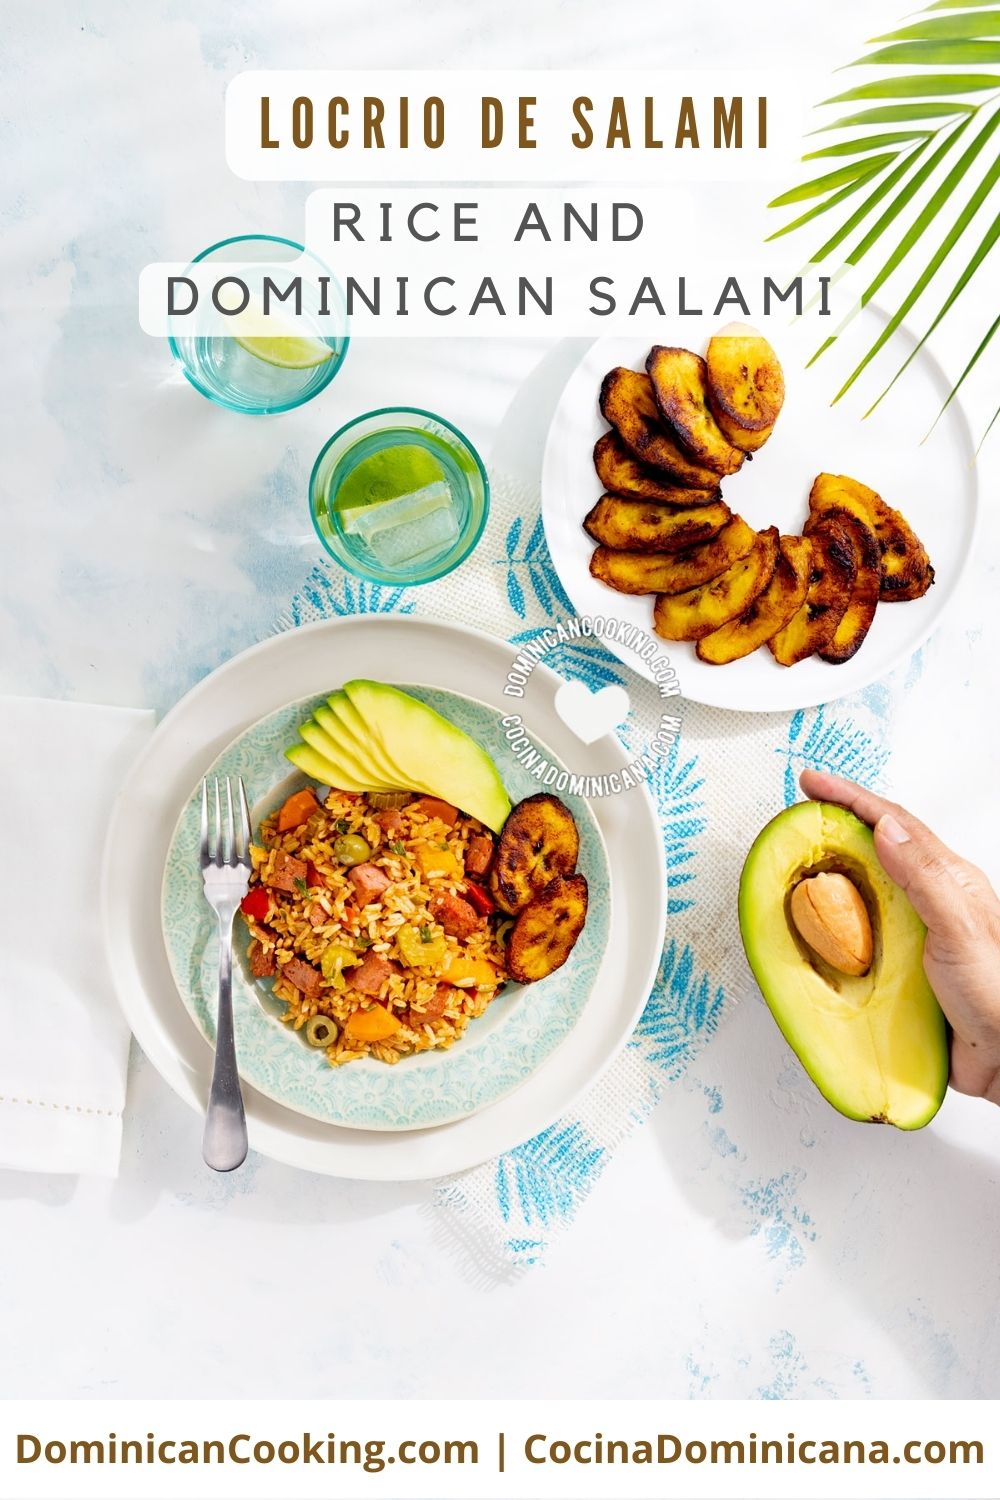 Locrio de salami (rice and dominican salami) recipe.